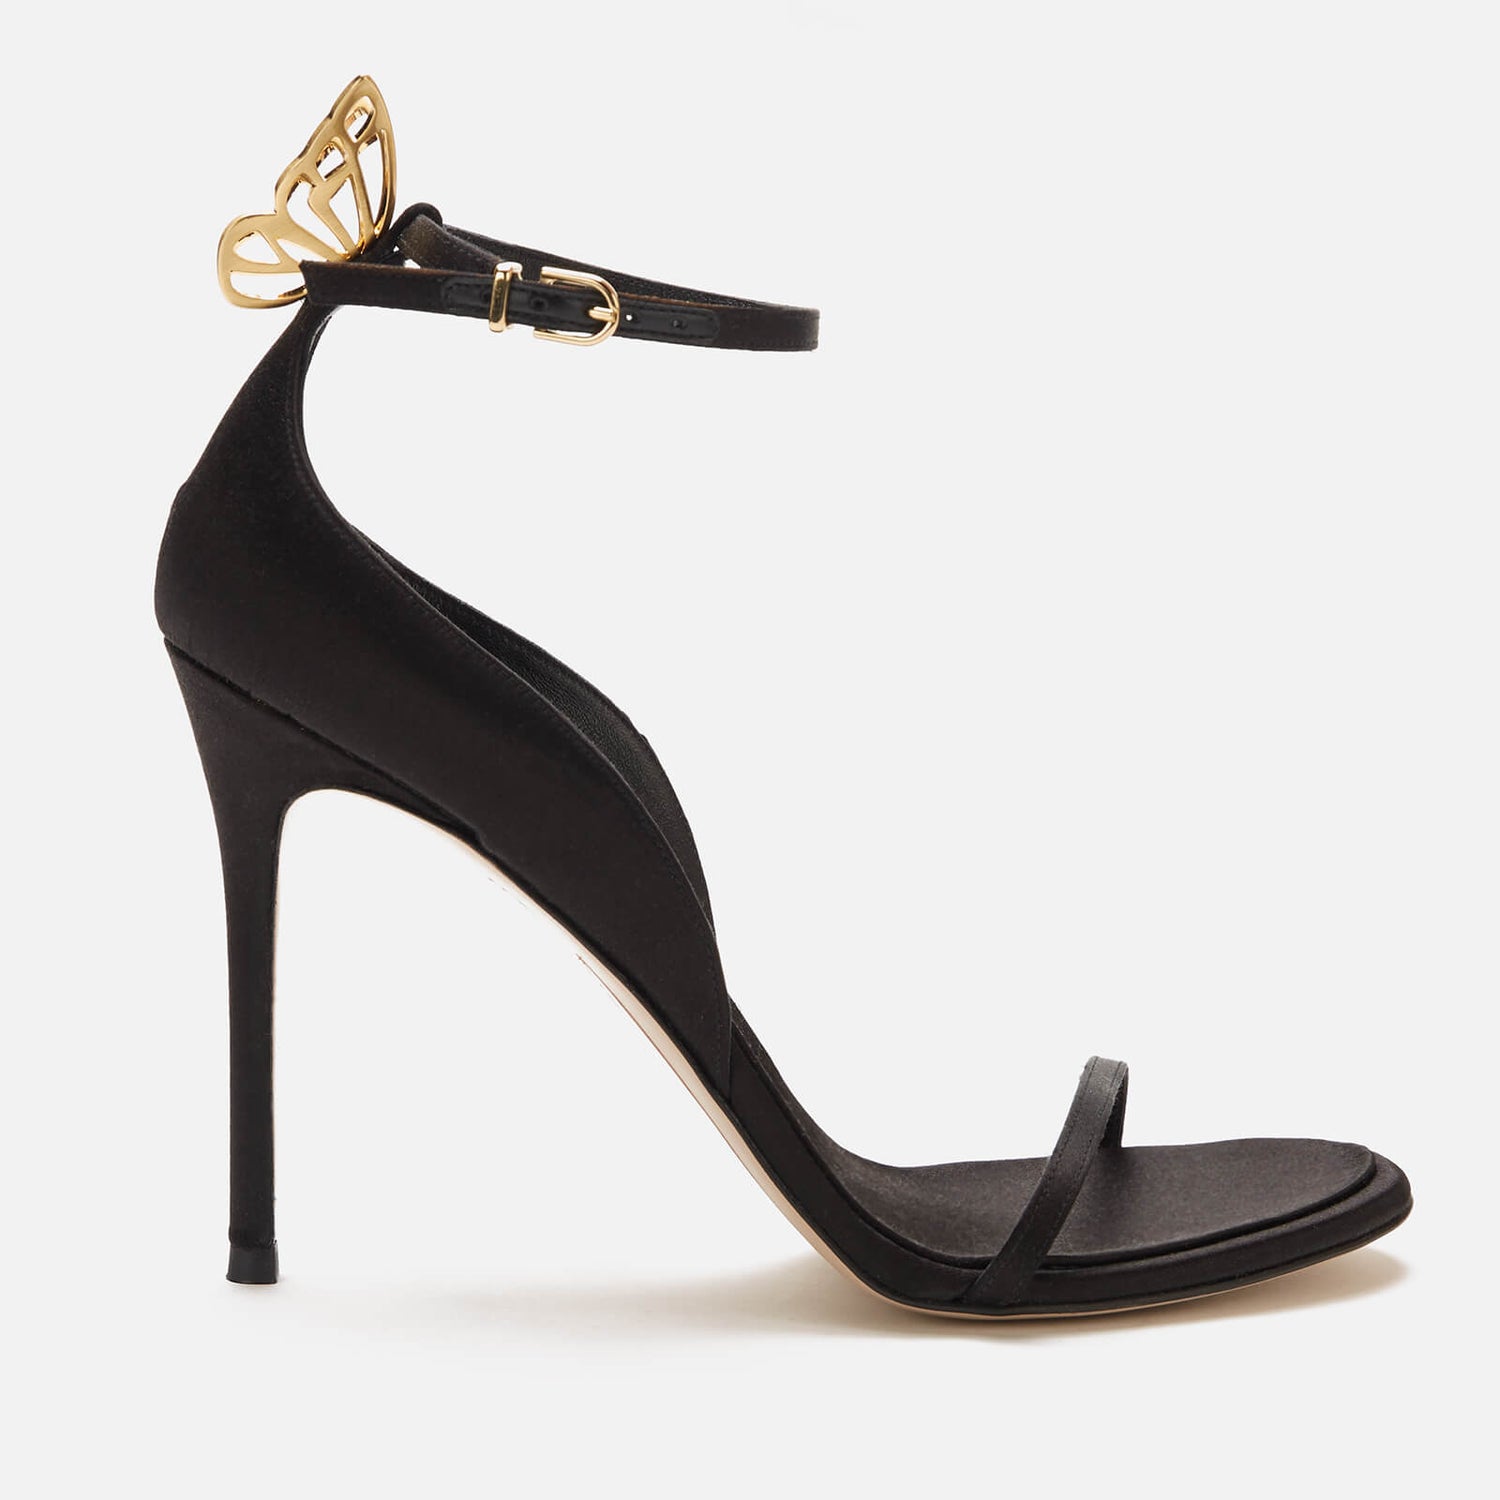 Sophia Webster Women's Mariposa Heeled Sandals - Black Satin/Gold - UK 3